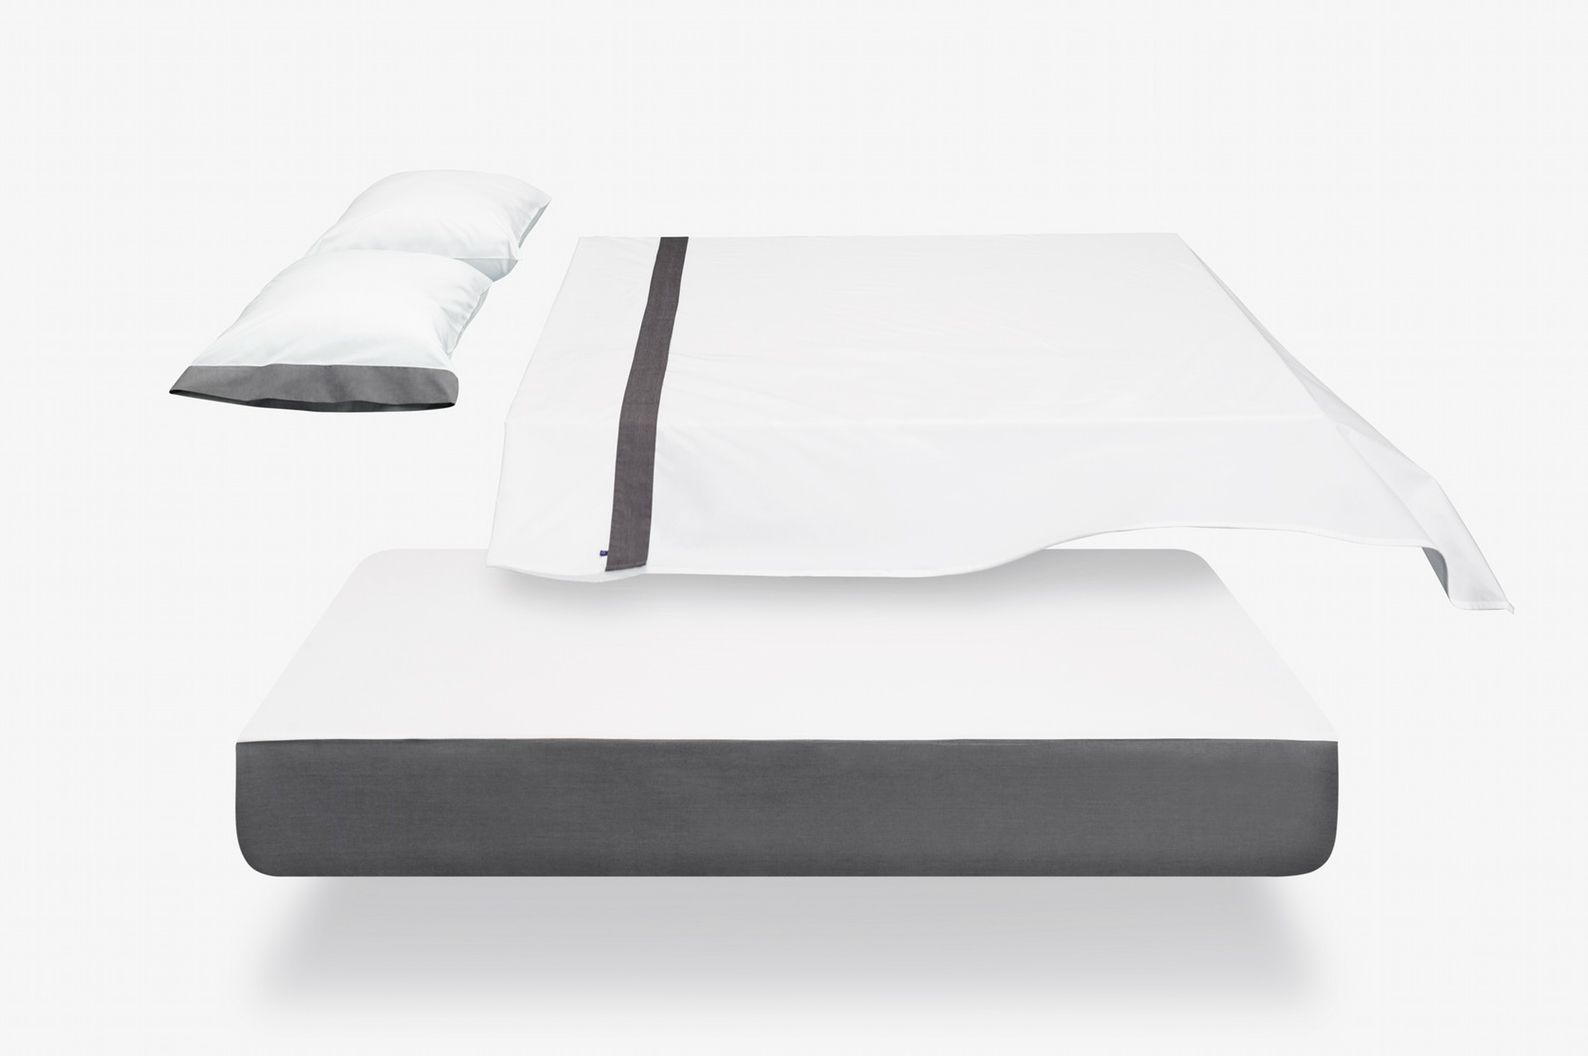 mattress company casper now sells sheets and pillows